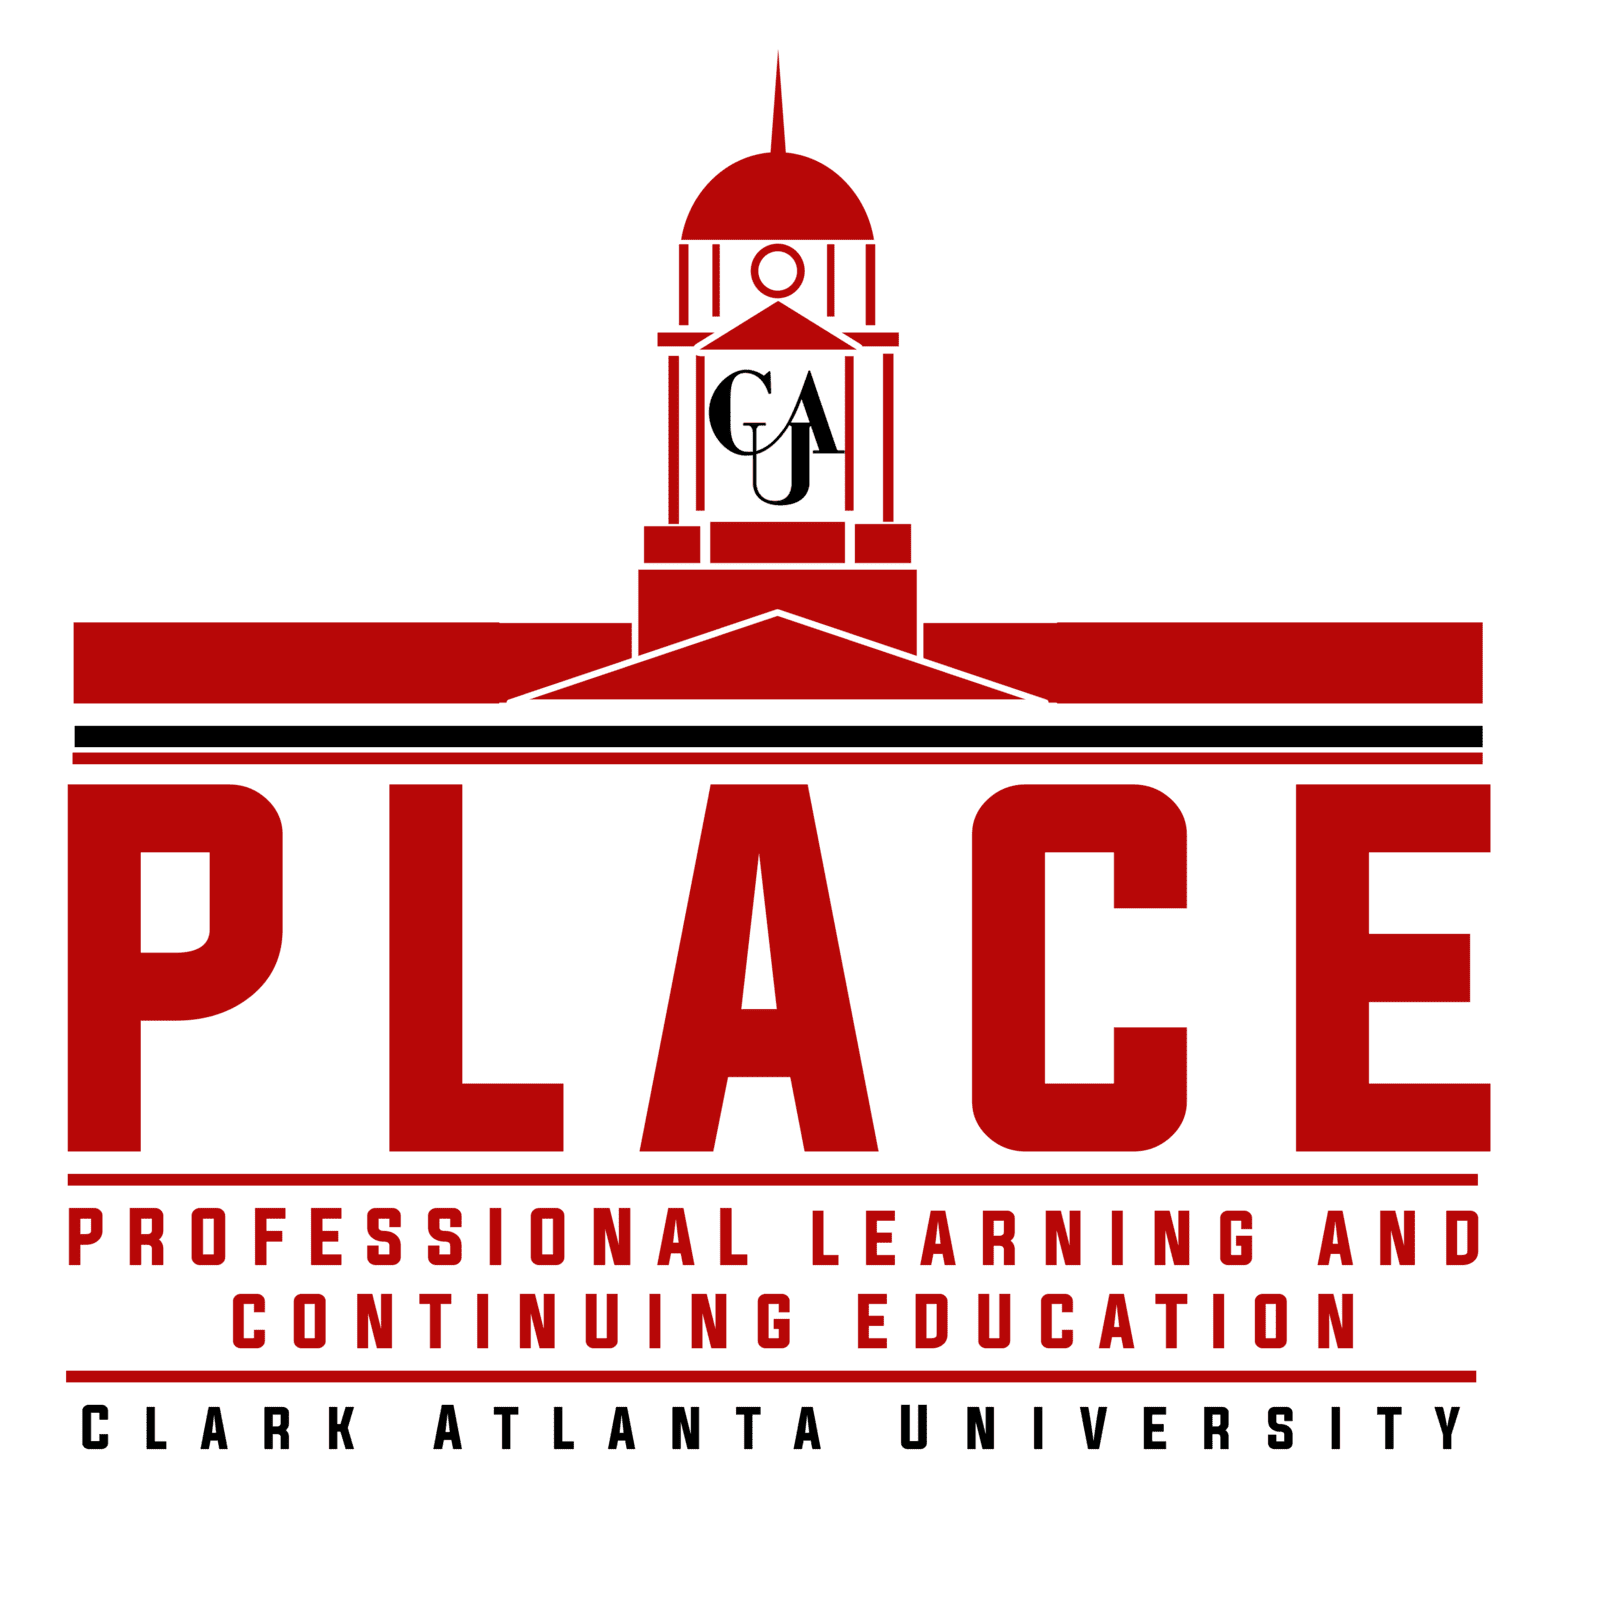 Professional Learning and Continuing Education at Clark Atlanta University